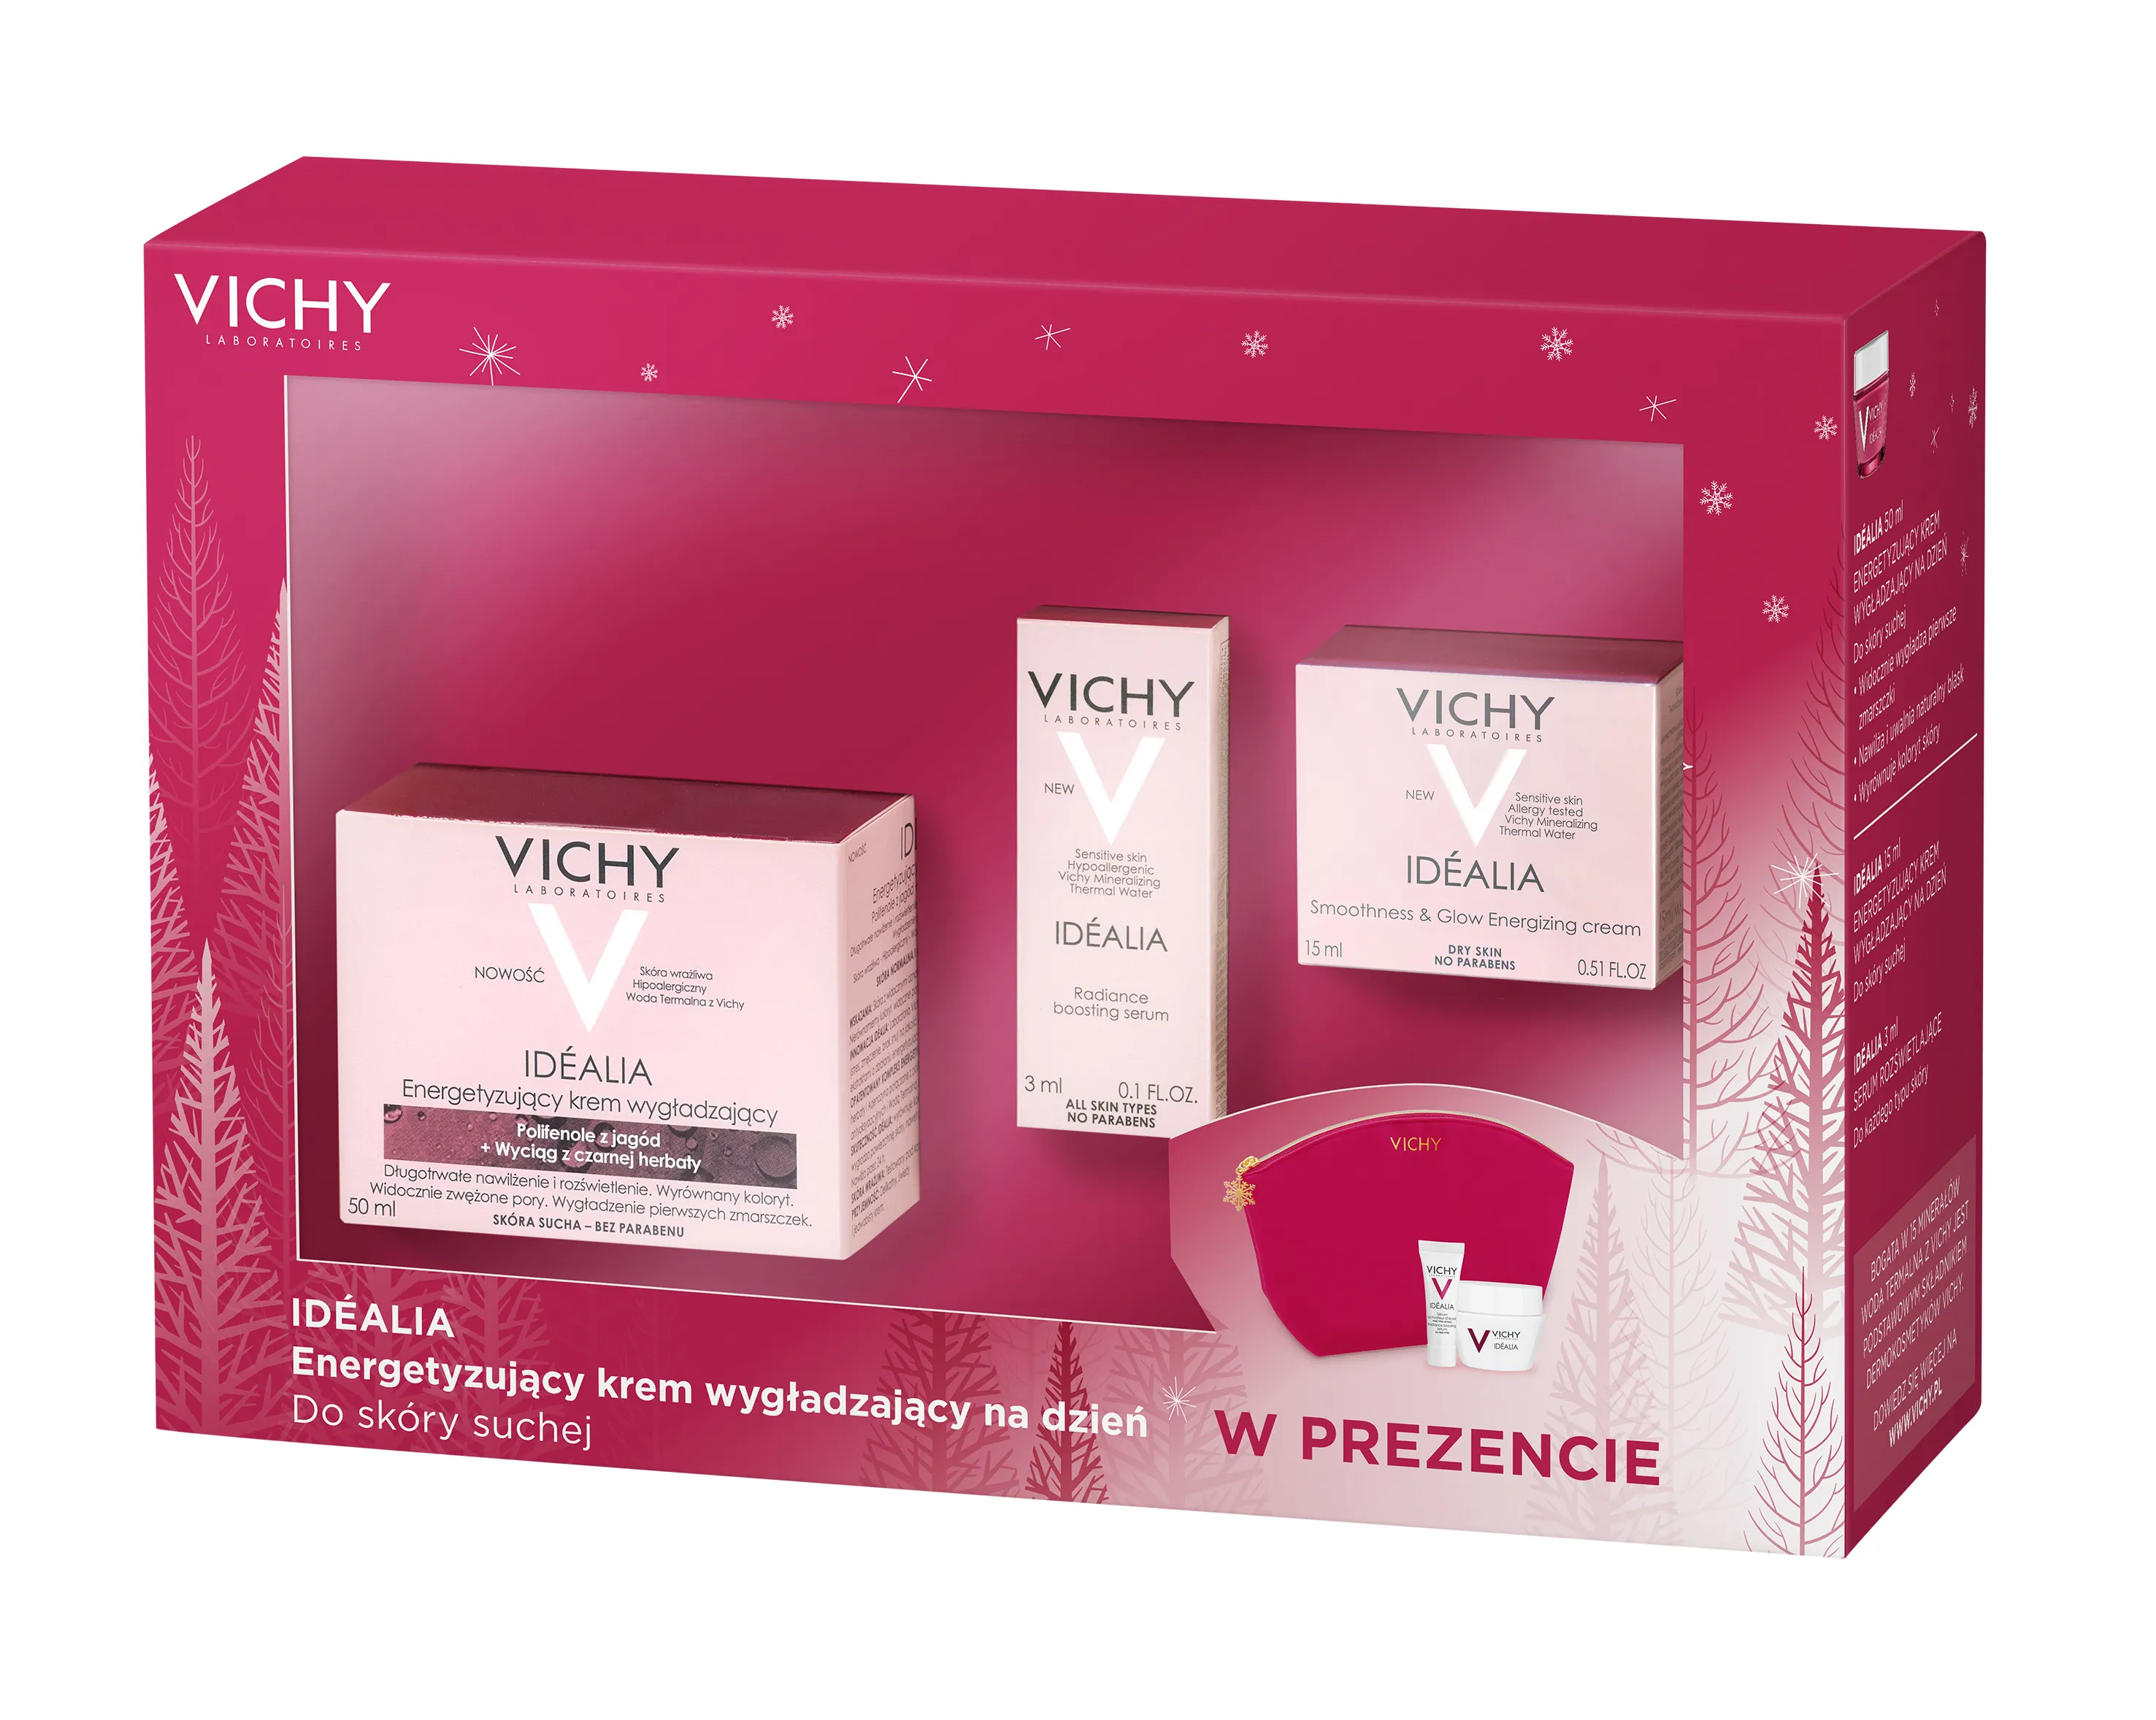 Vichy zestaw Idealia, krem, skóra sucha, 50 ml + krem, 15 ml + serum, 3 ml + kosmetyczka